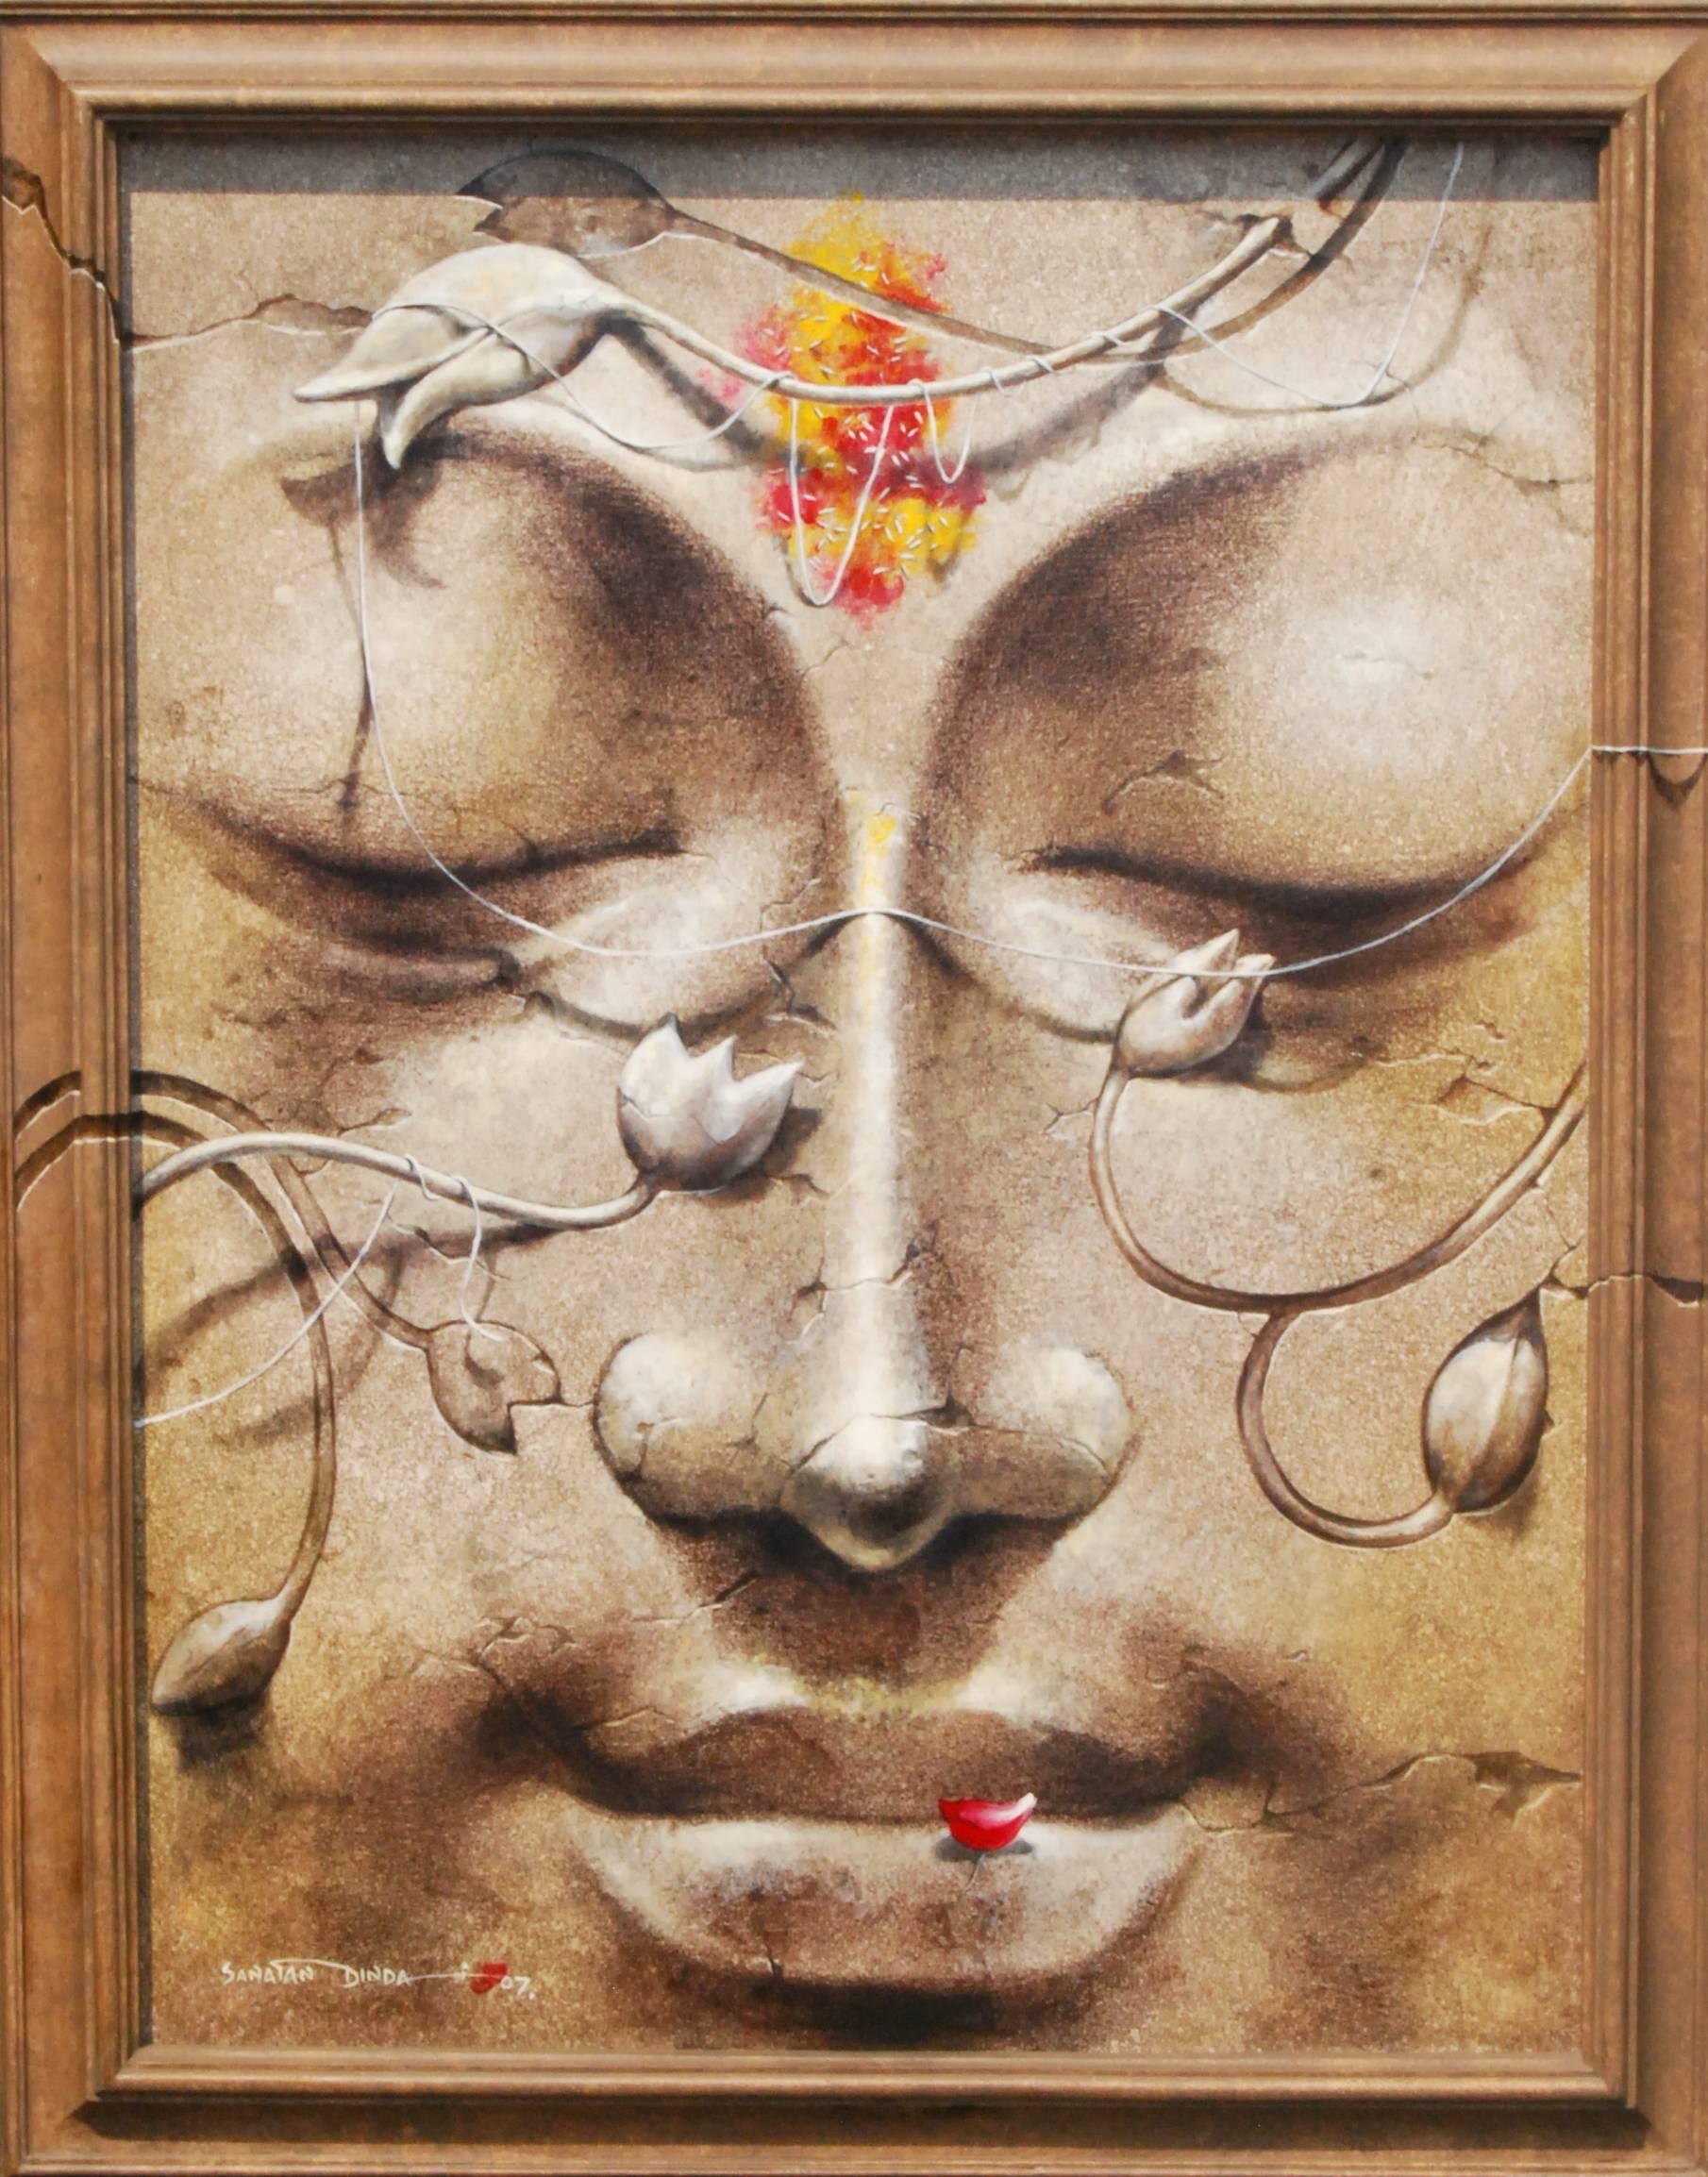 Sanatan Dinda Figurative Painting - Yug-Purush, Buddha, Enlightened Man, Acrylic by Indian Visual Artist "In Stock"